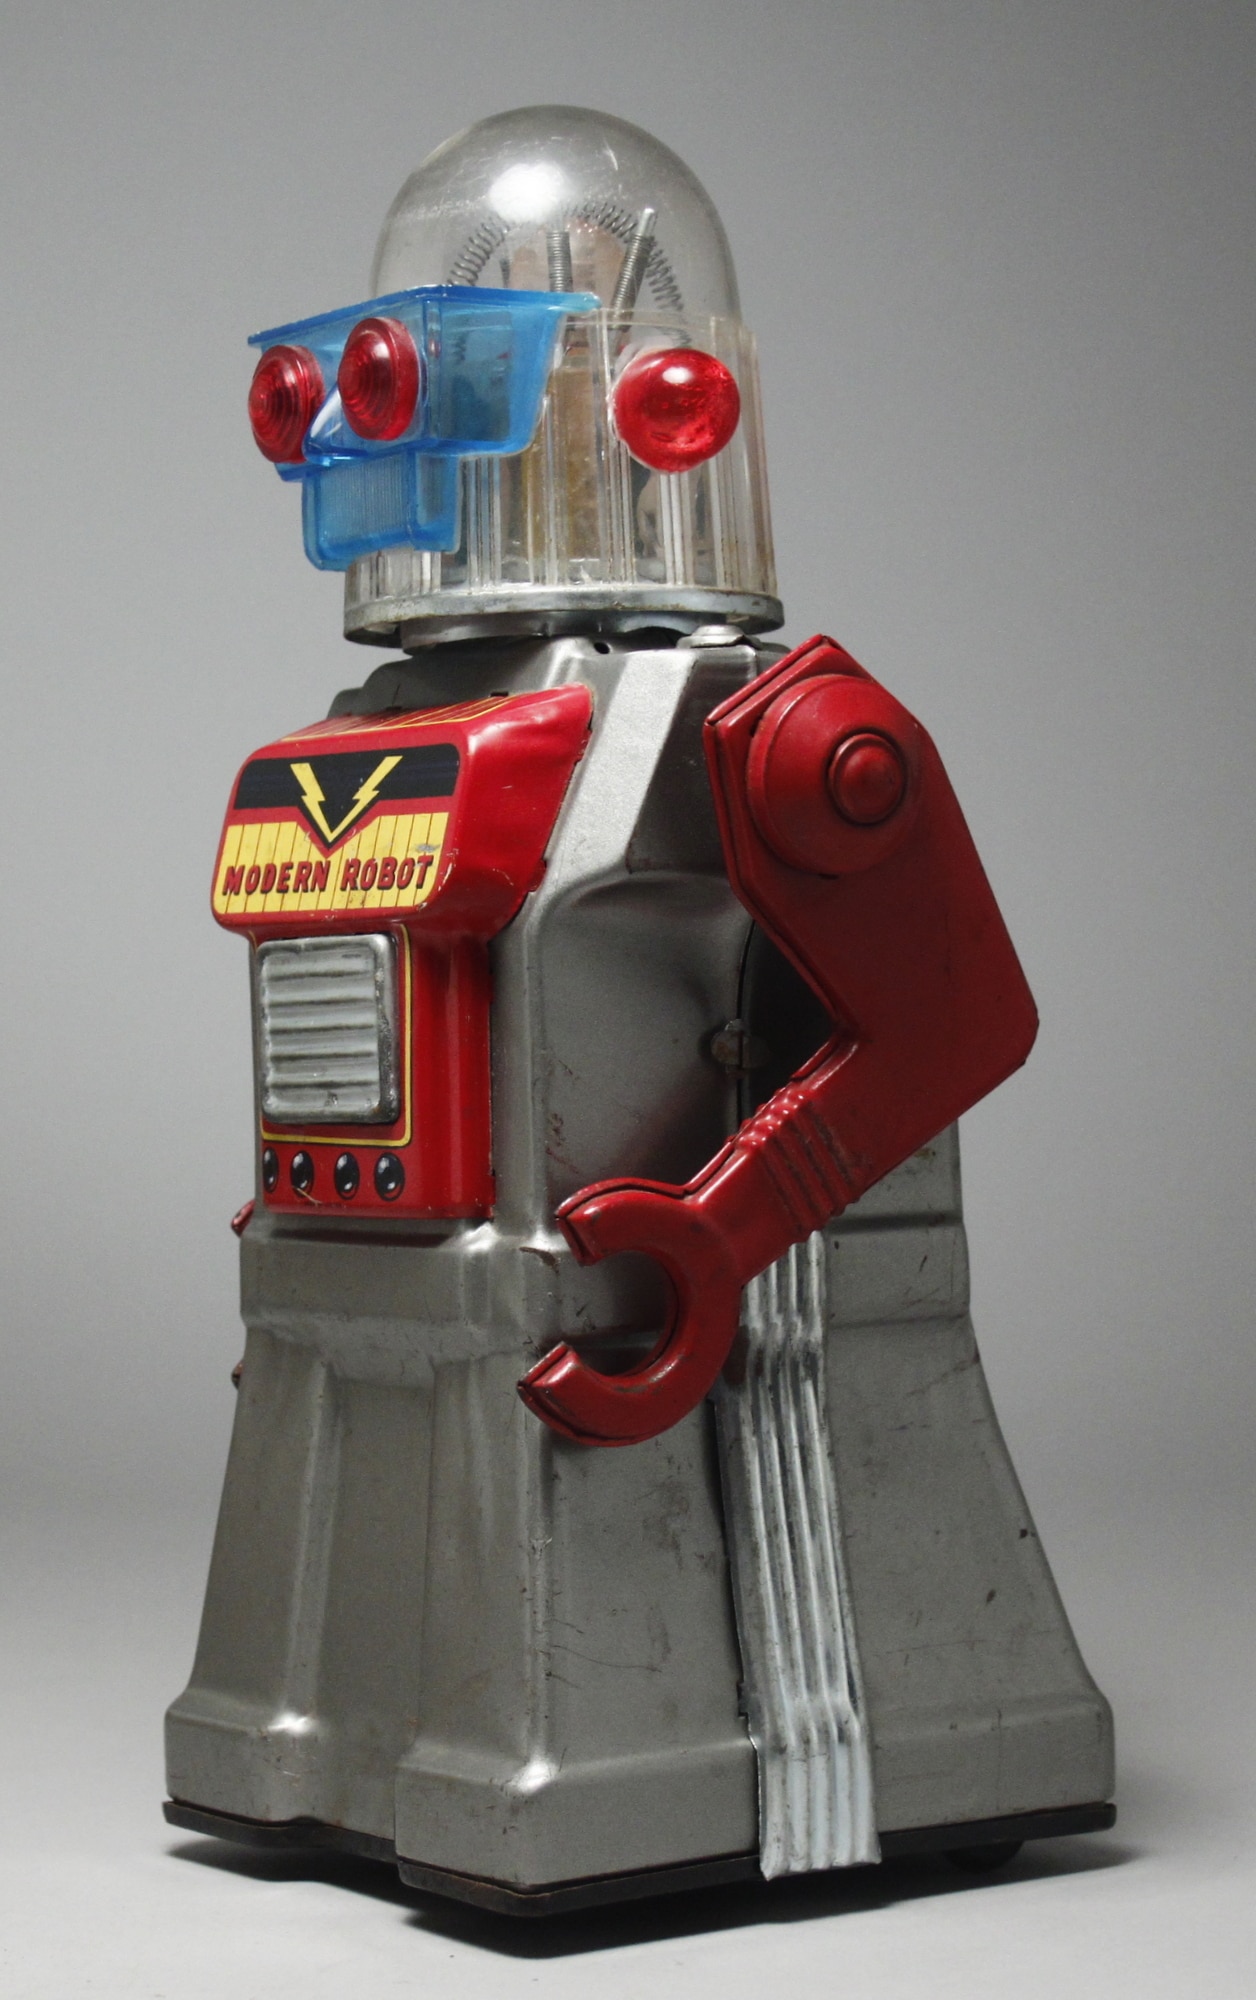 MODERN ROBOT ブリキロボット - おもちゃ